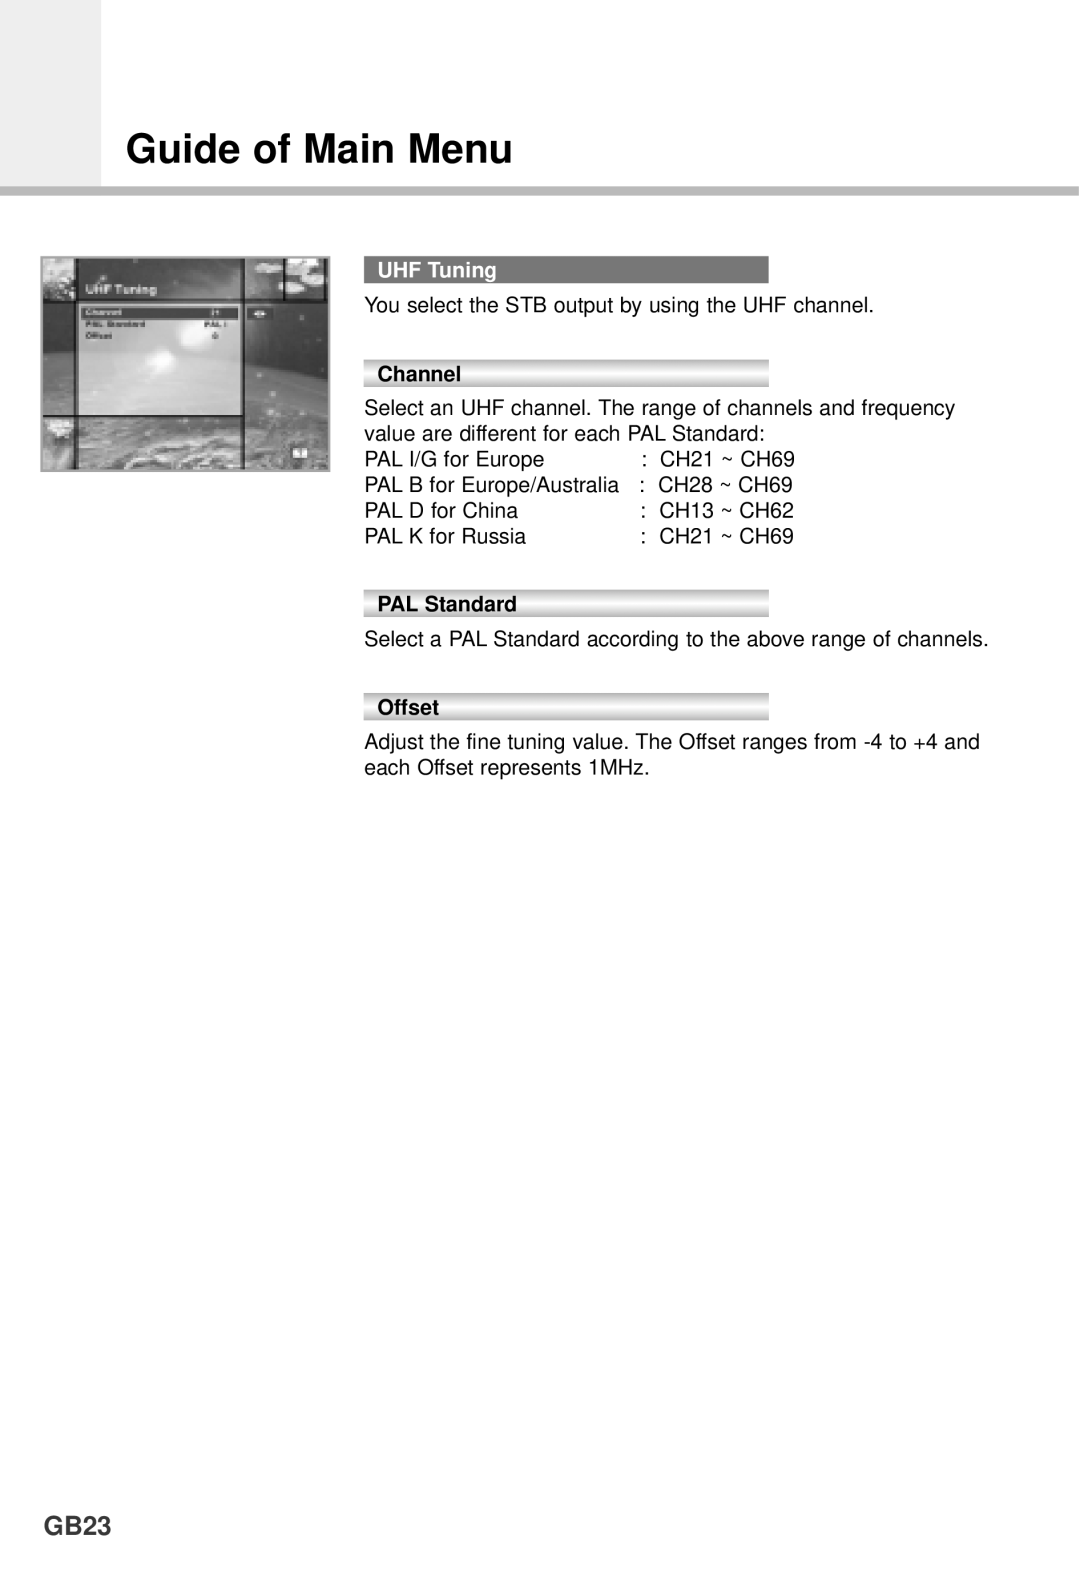 Humax F1-4000T manual GB23, UHF Tuning, Channel, PAL Standard, Offset, Guide of Main Menu 